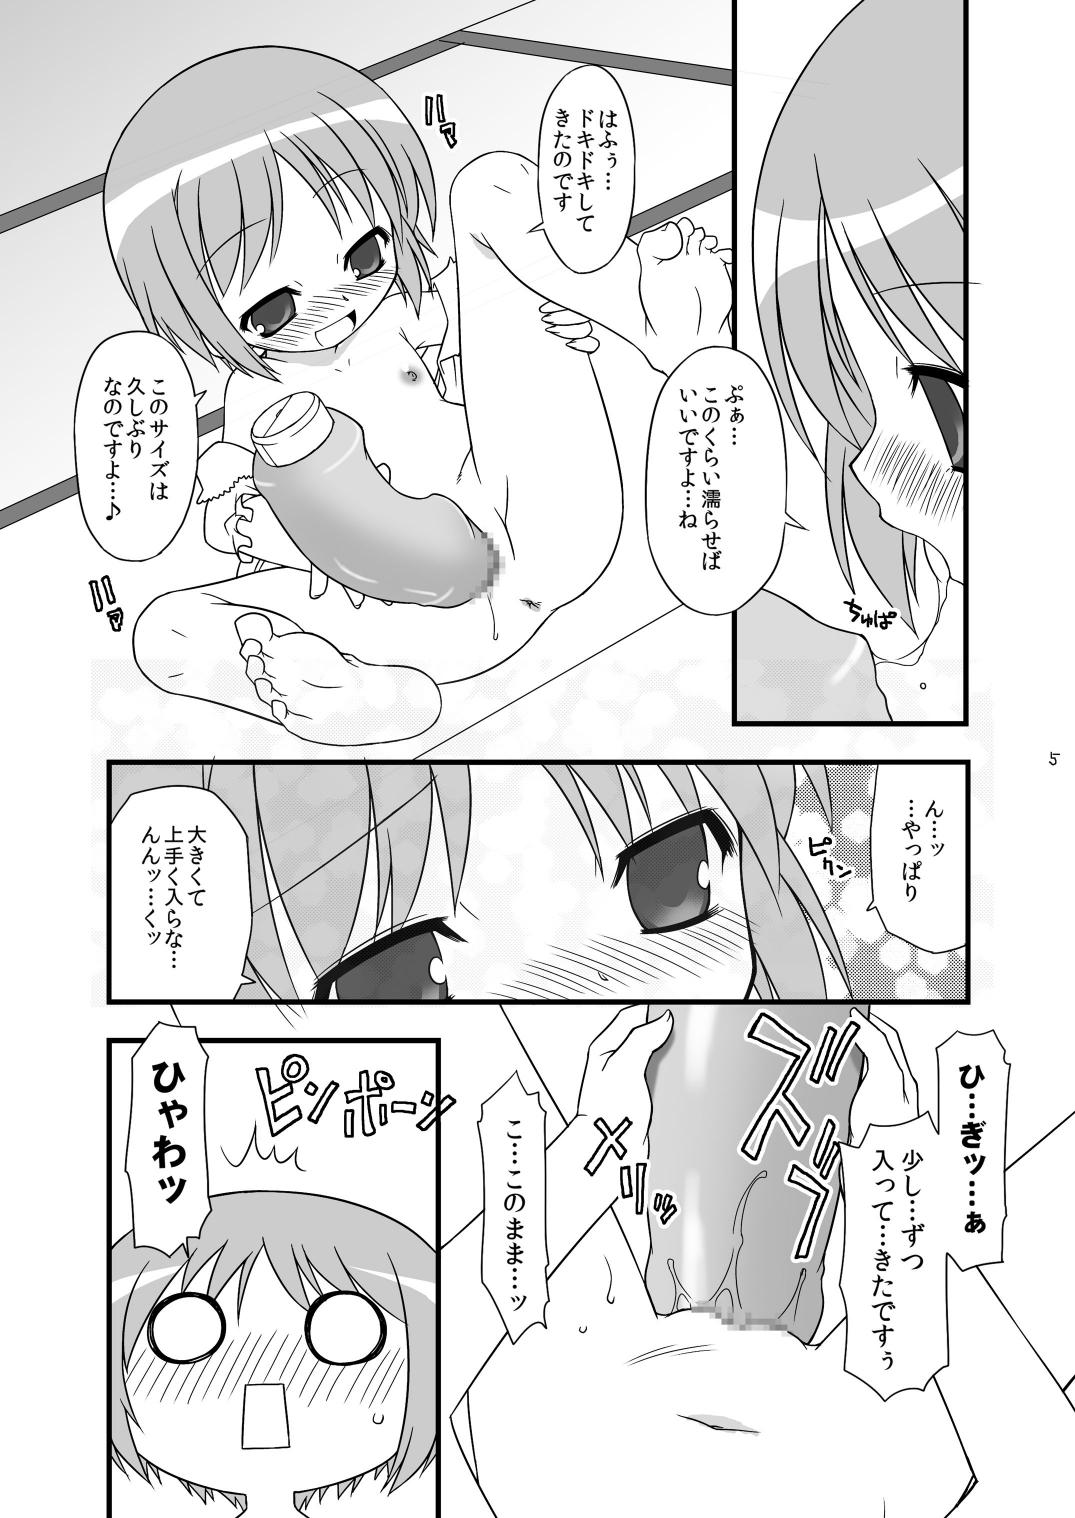 Mature Woman KA+SHI+MA+SHI=INDEX! - Toaru majutsu no index Ftvgirls - Page 6